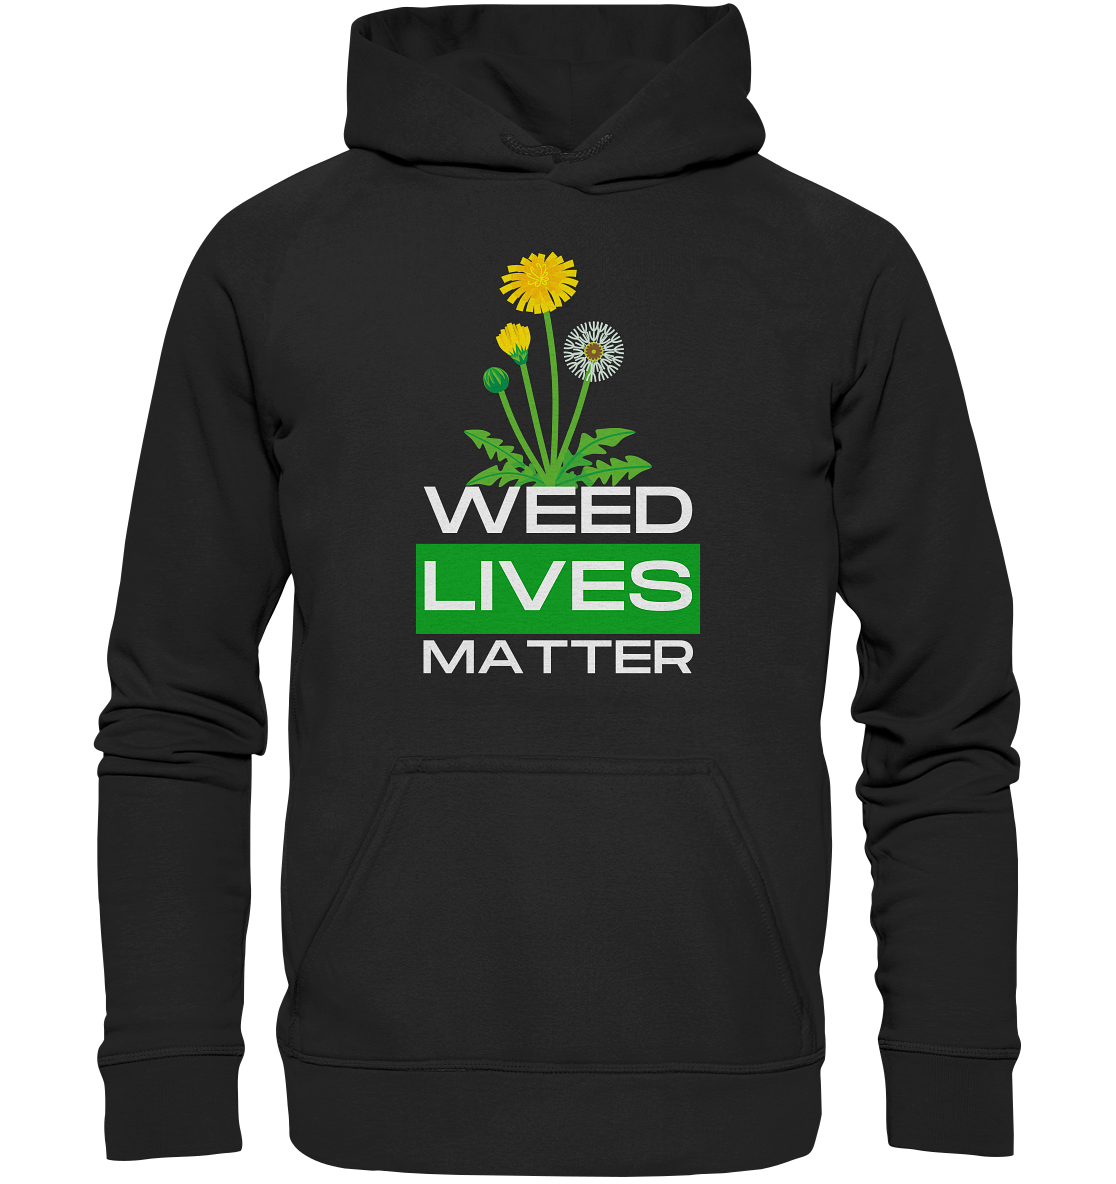 Weed lives matter - Hoodie